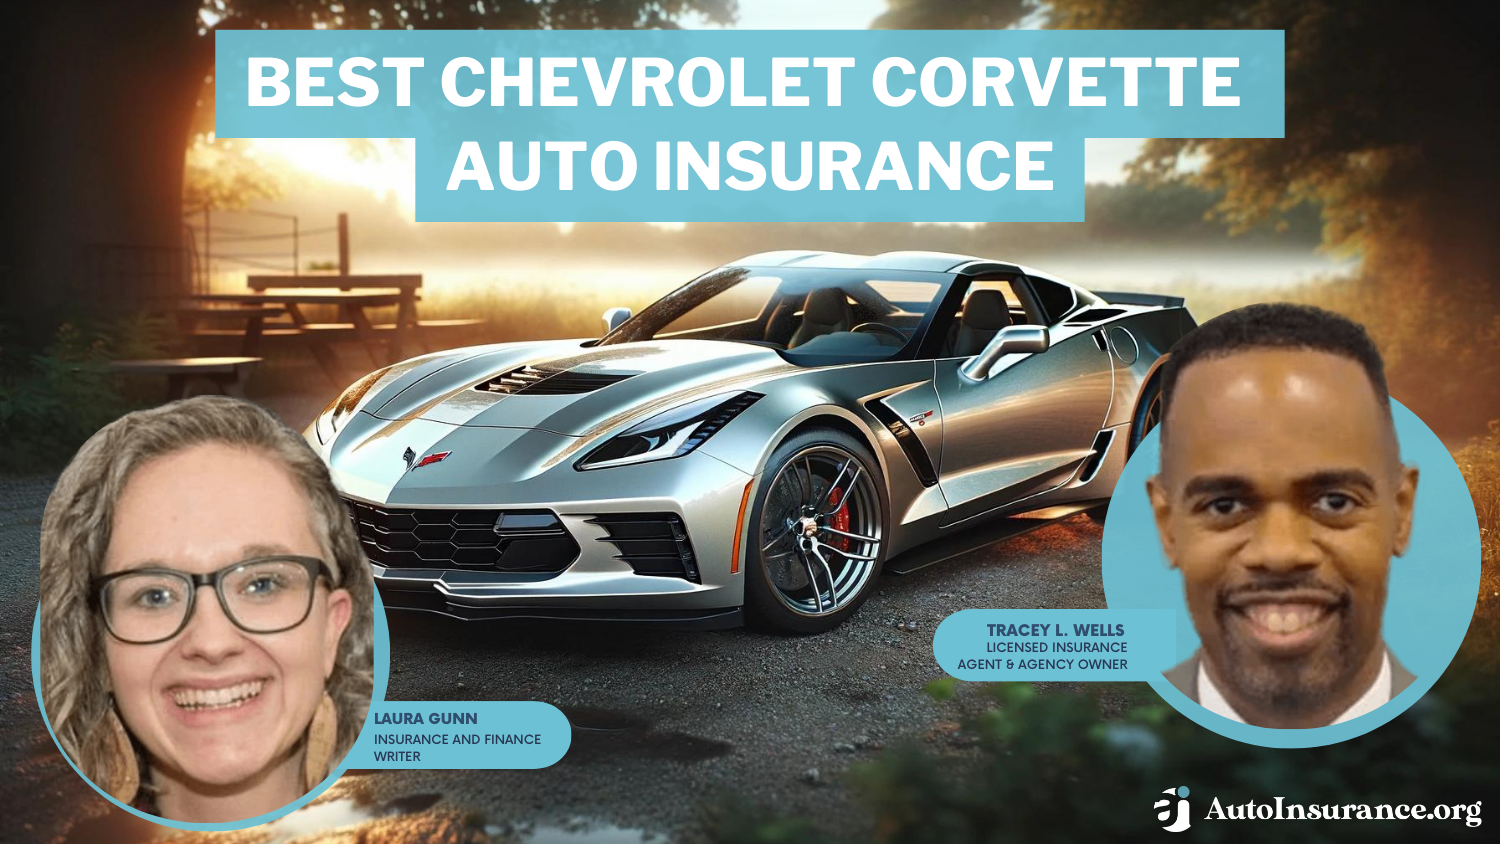 Best Chevrolet Corvette Auto Insurance: State Farm, Allstate, Nationwide